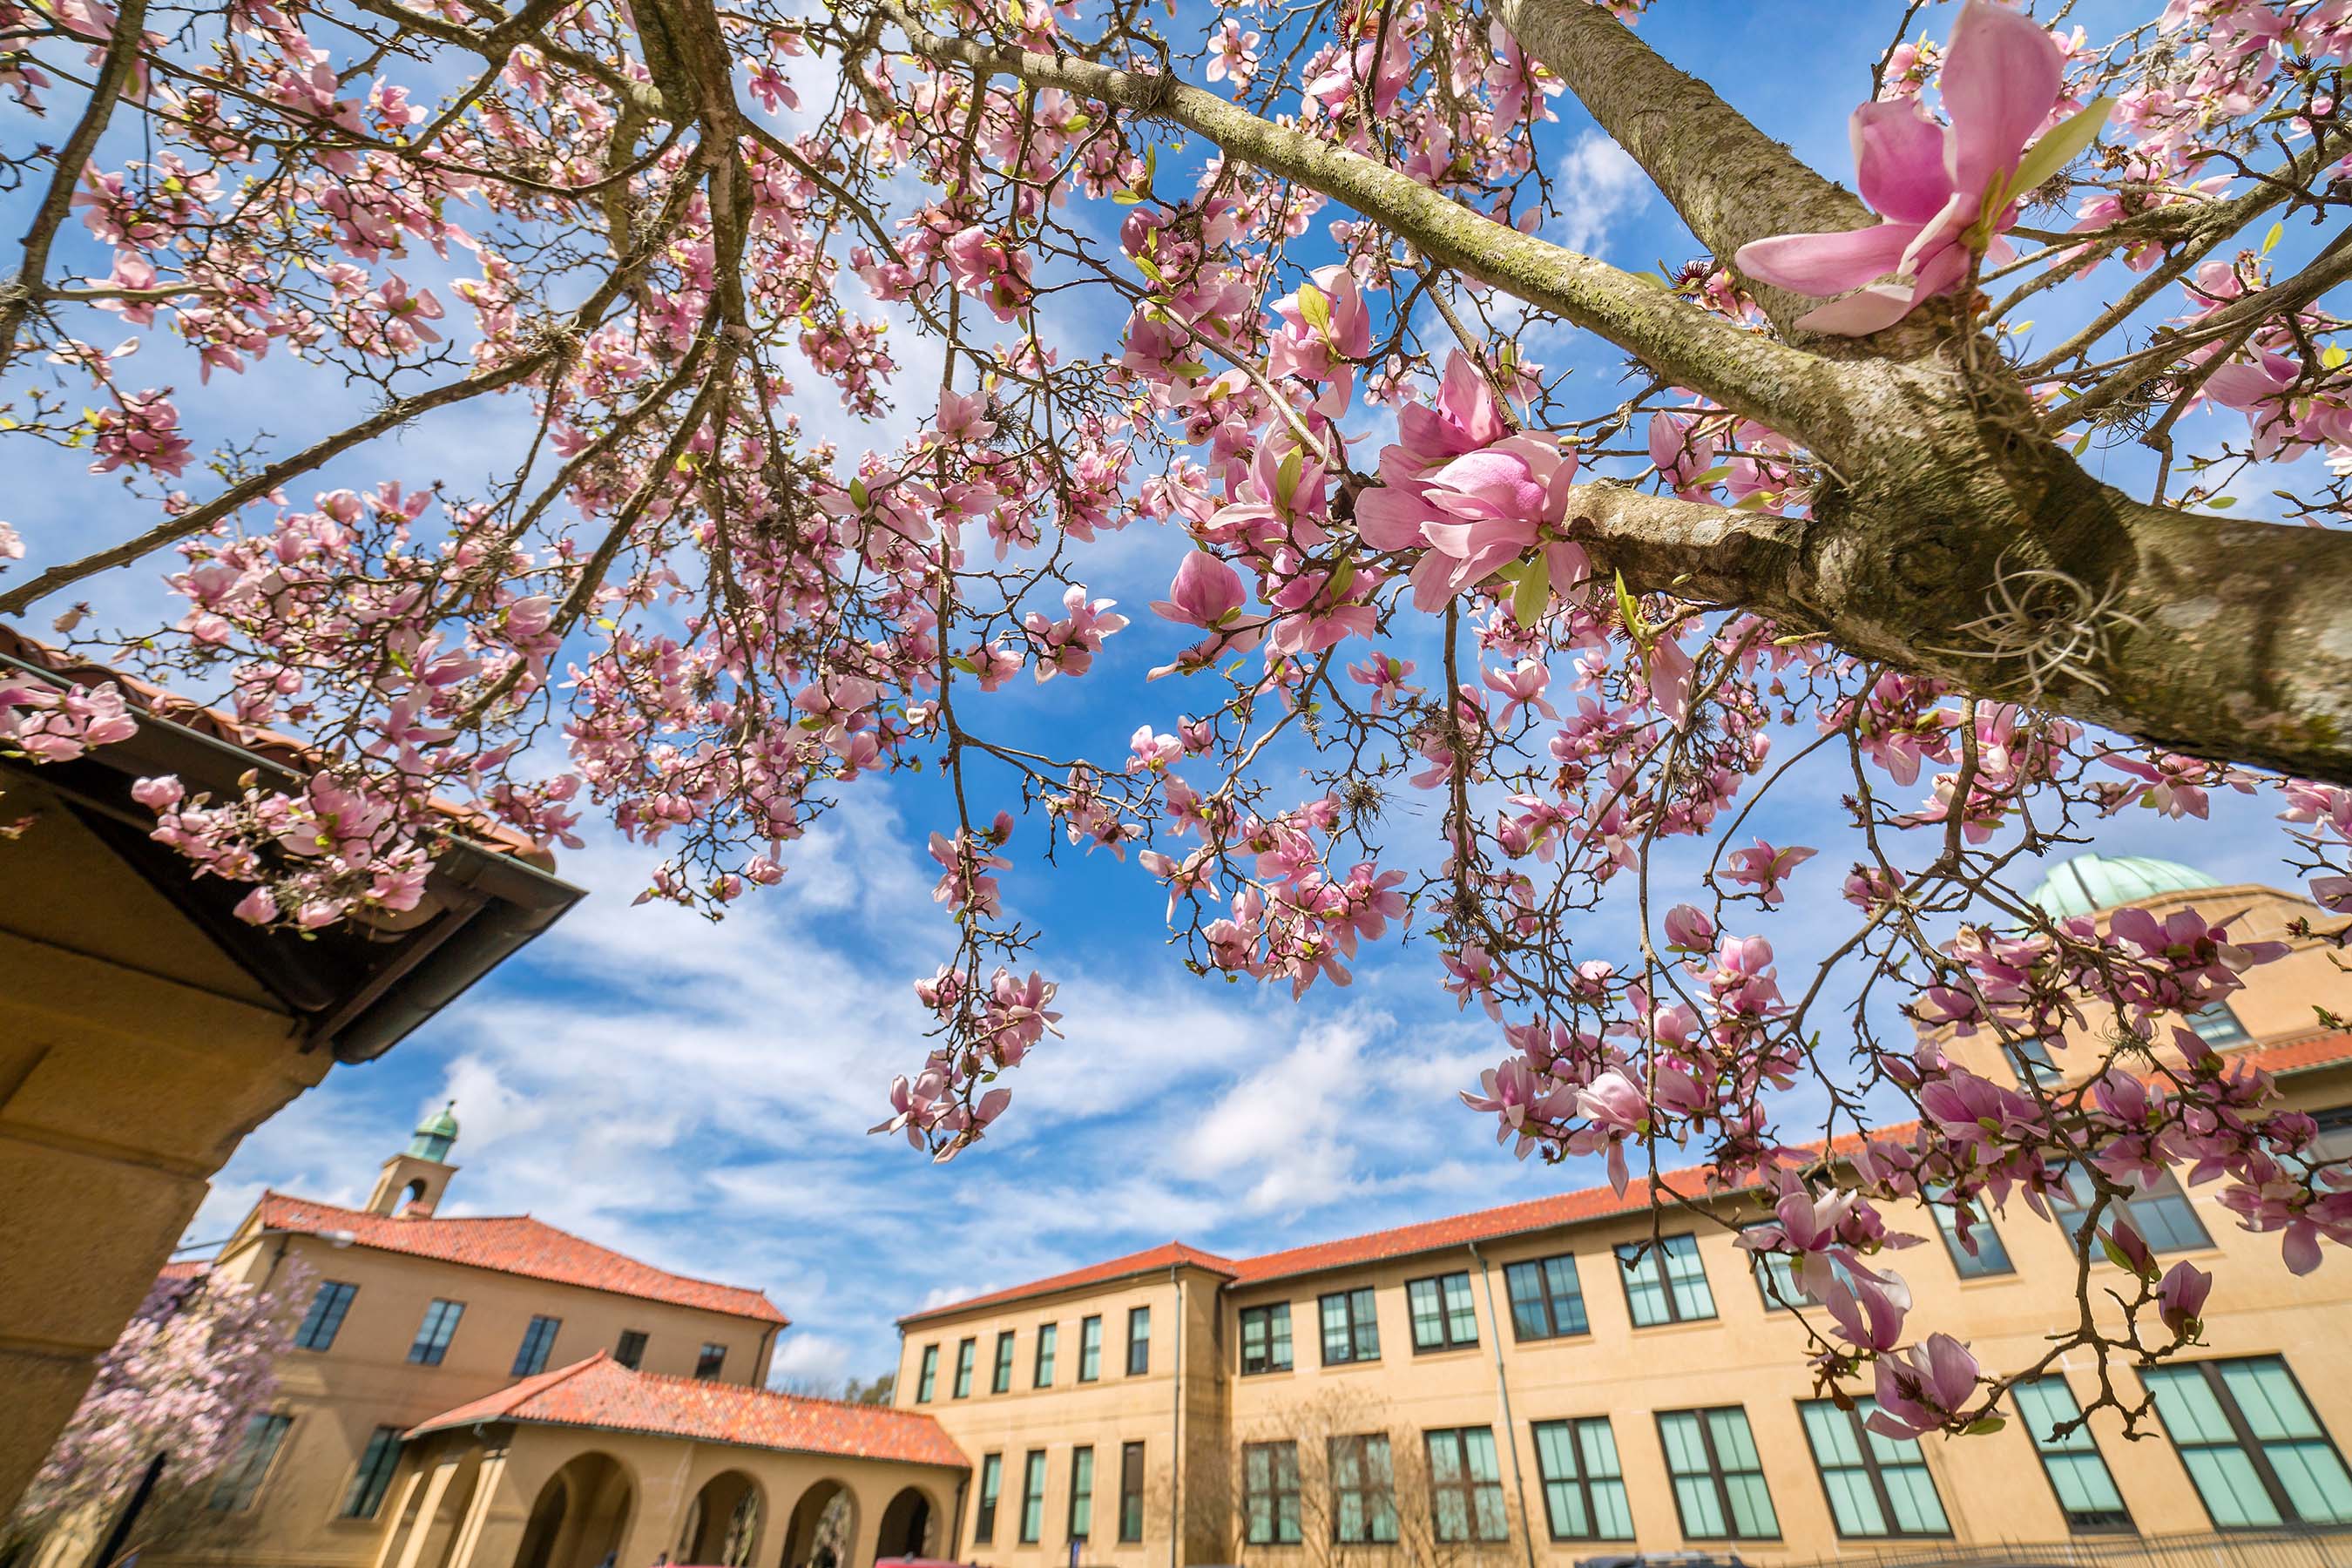 Japanese magnolias on LSU campus